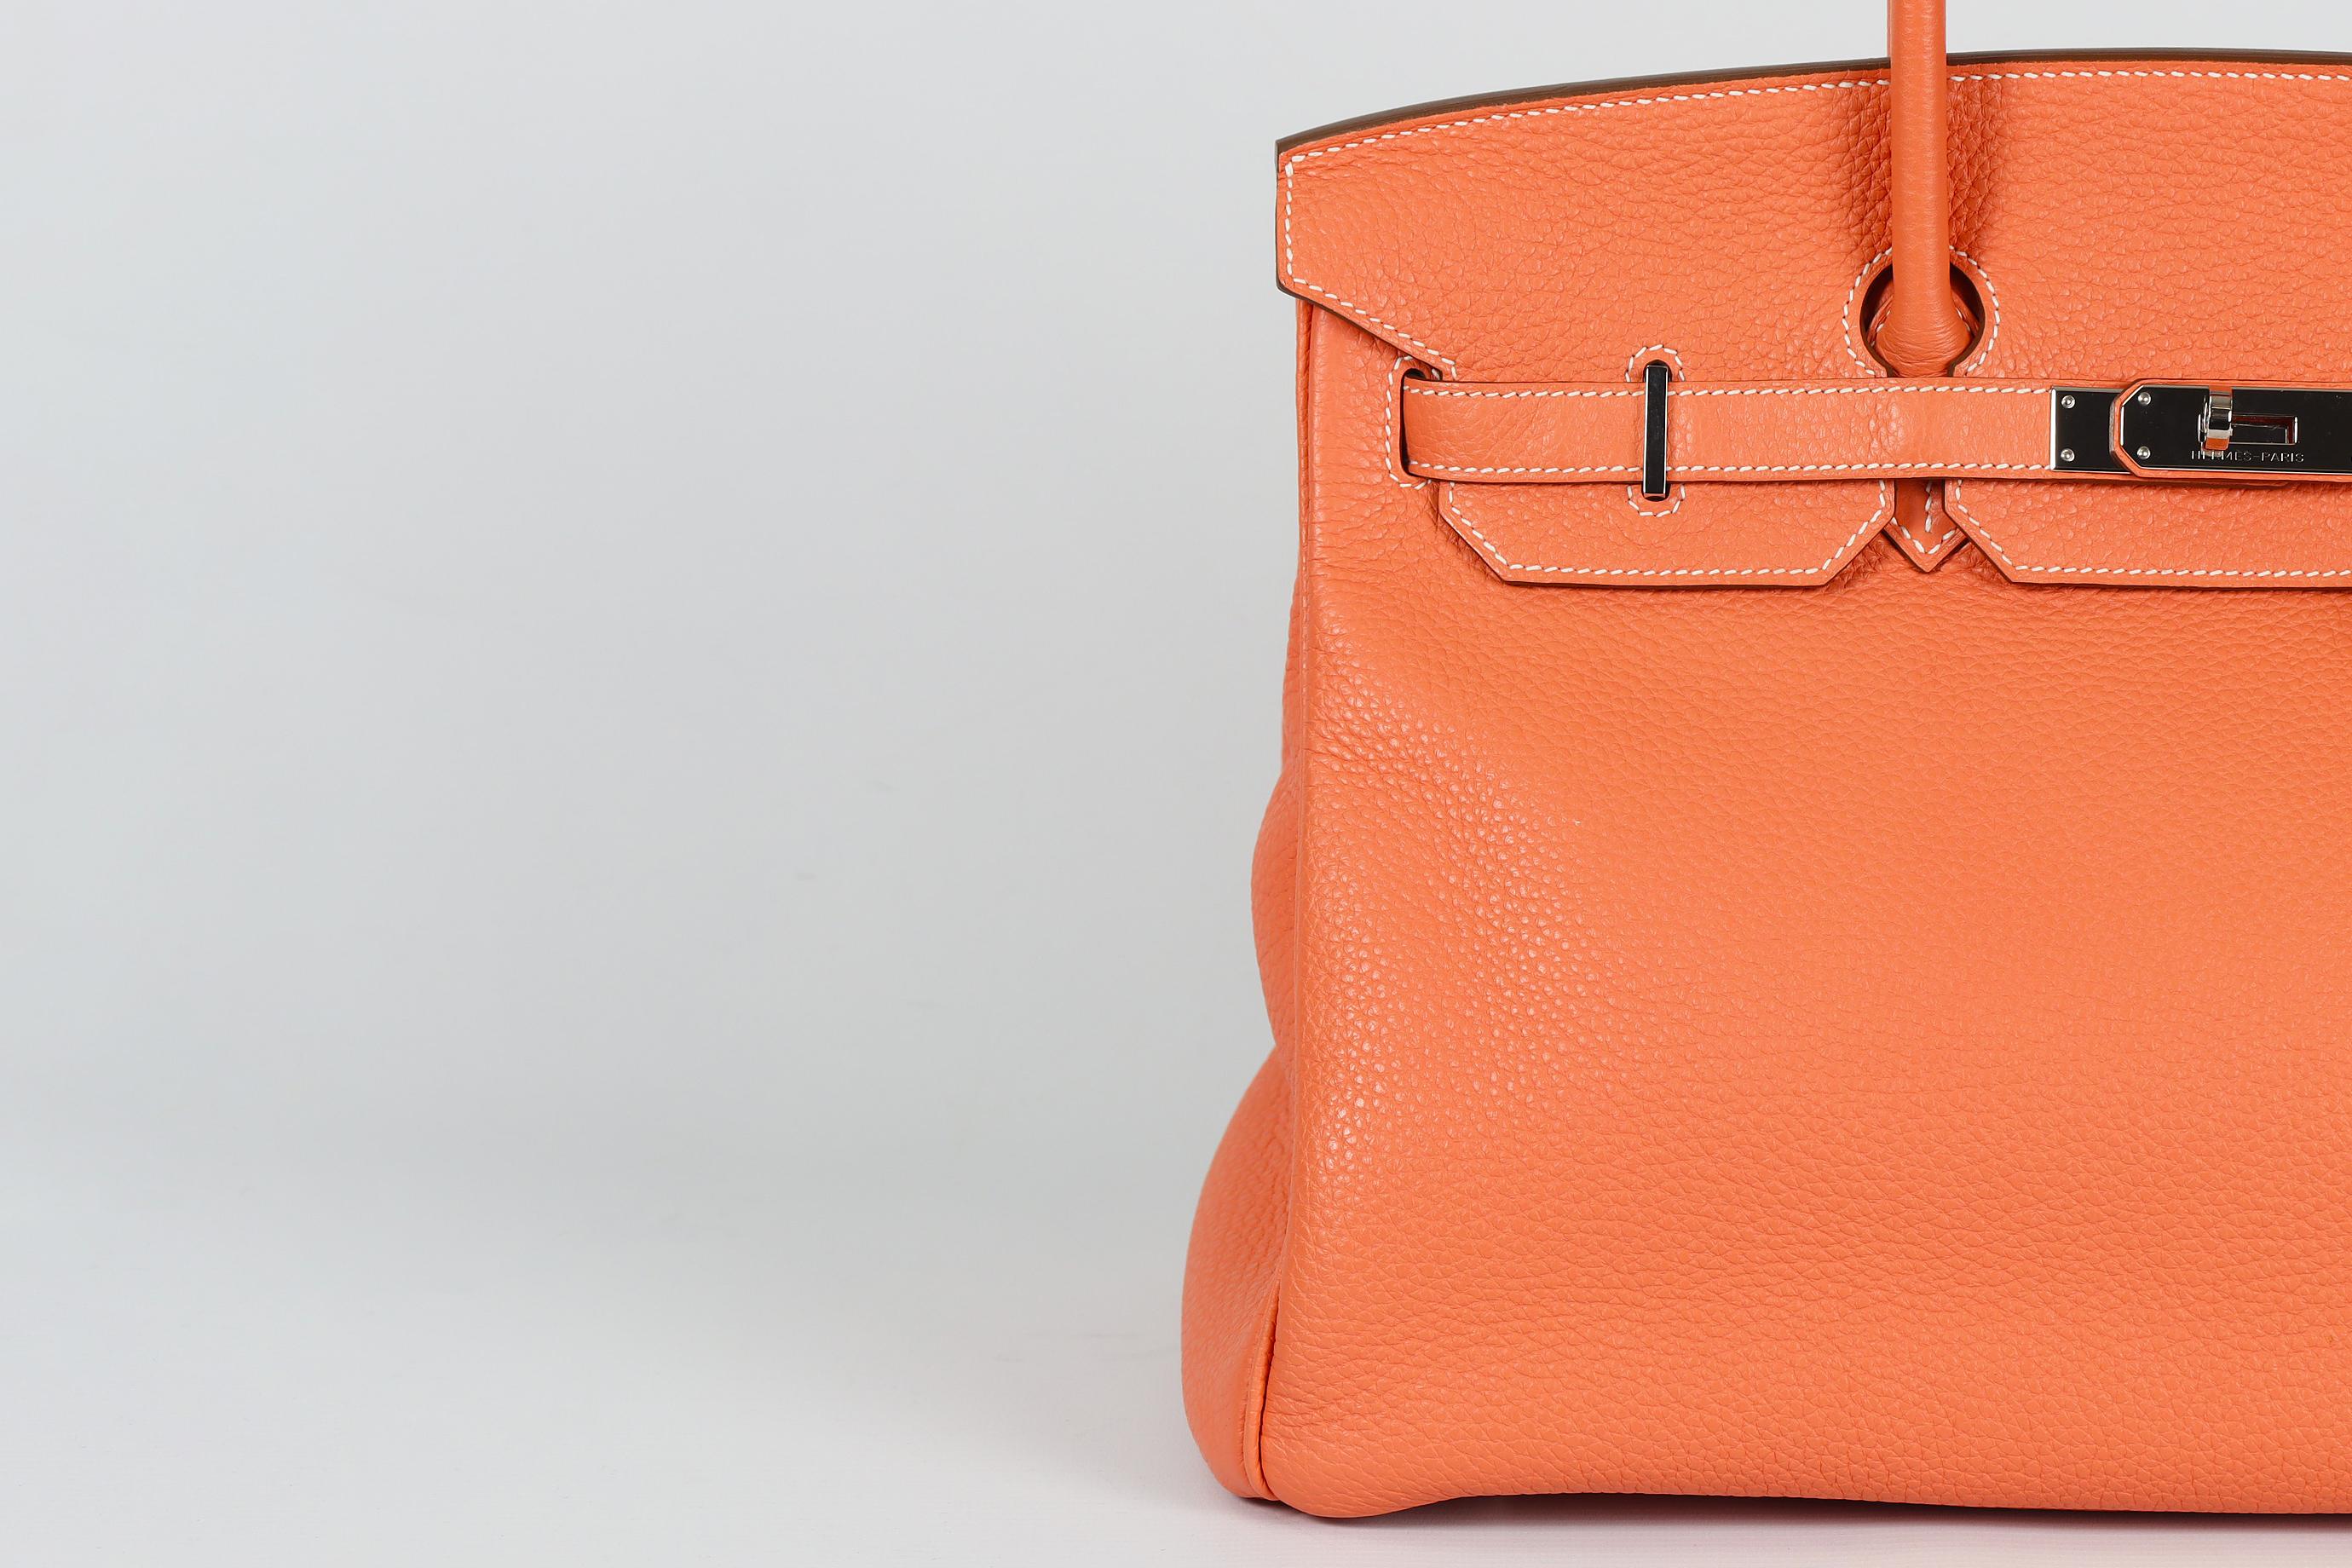 Hermès 2013 Birkin 35cm Clemence Leather Bag For Sale 8